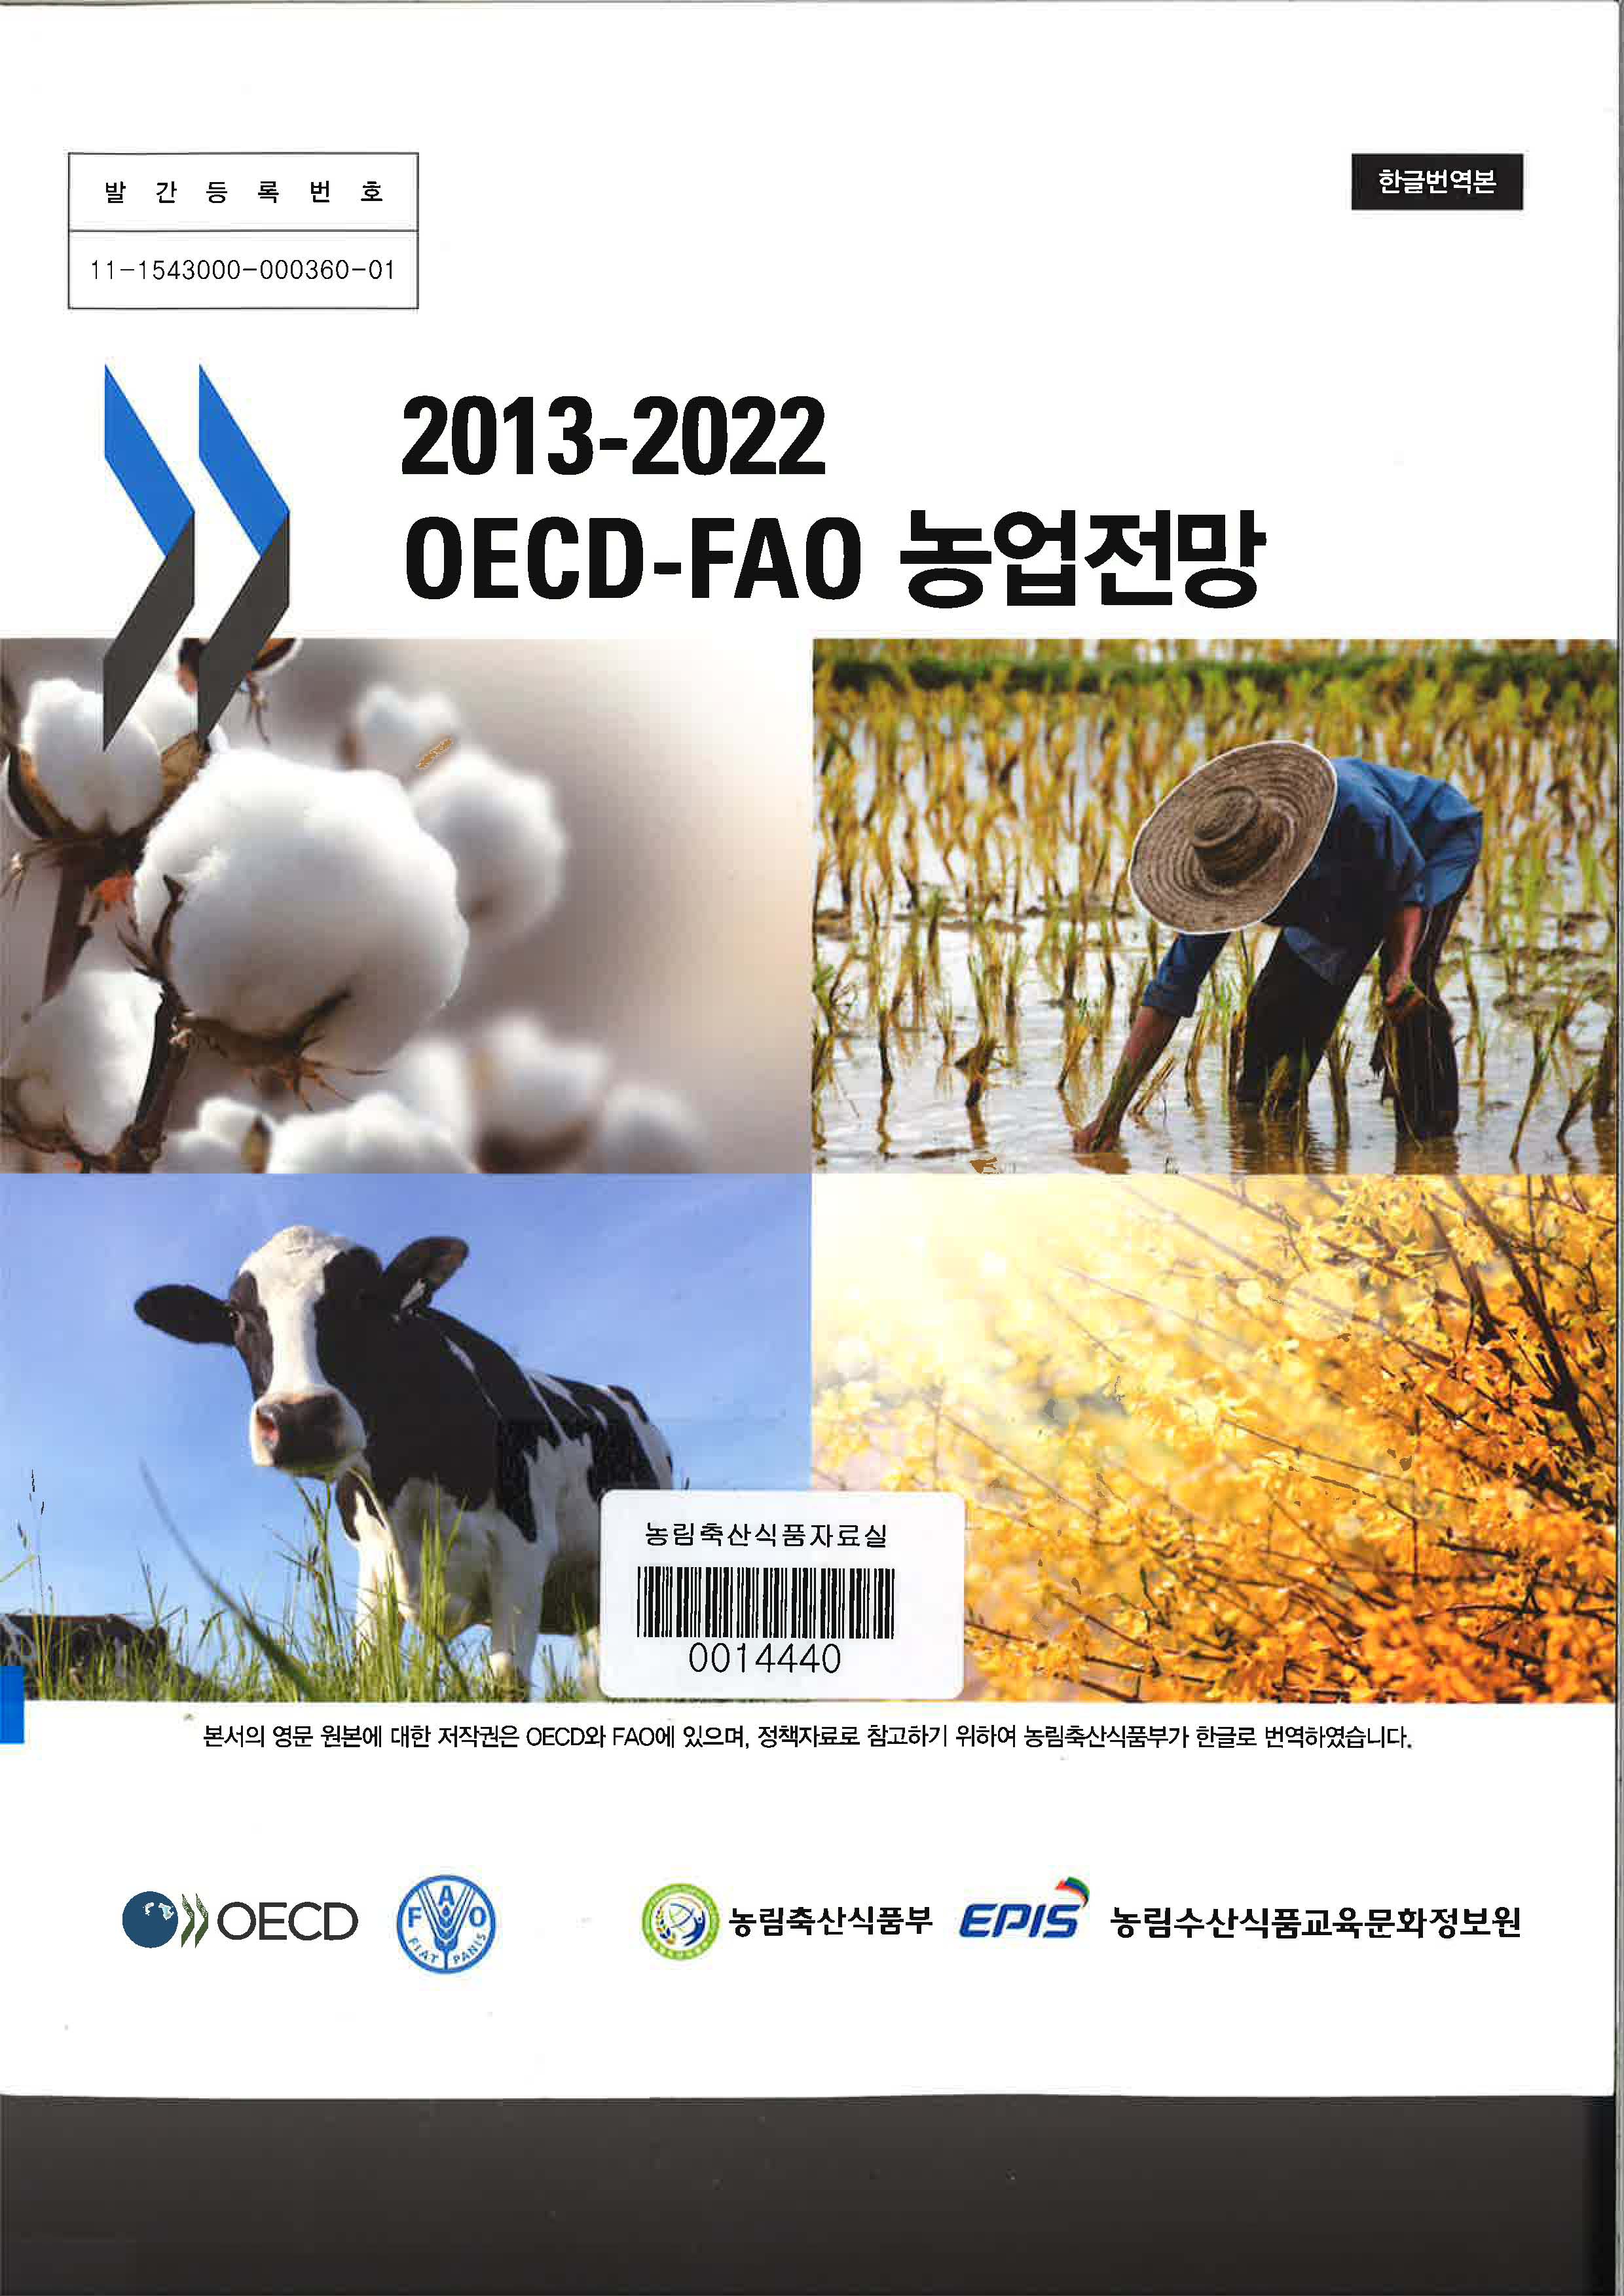 2013-2022 OECD-FAO 농업전망 / 농림축산식품부 국제협력총괄과 ; 농림수산식품교육문화정보원 [...